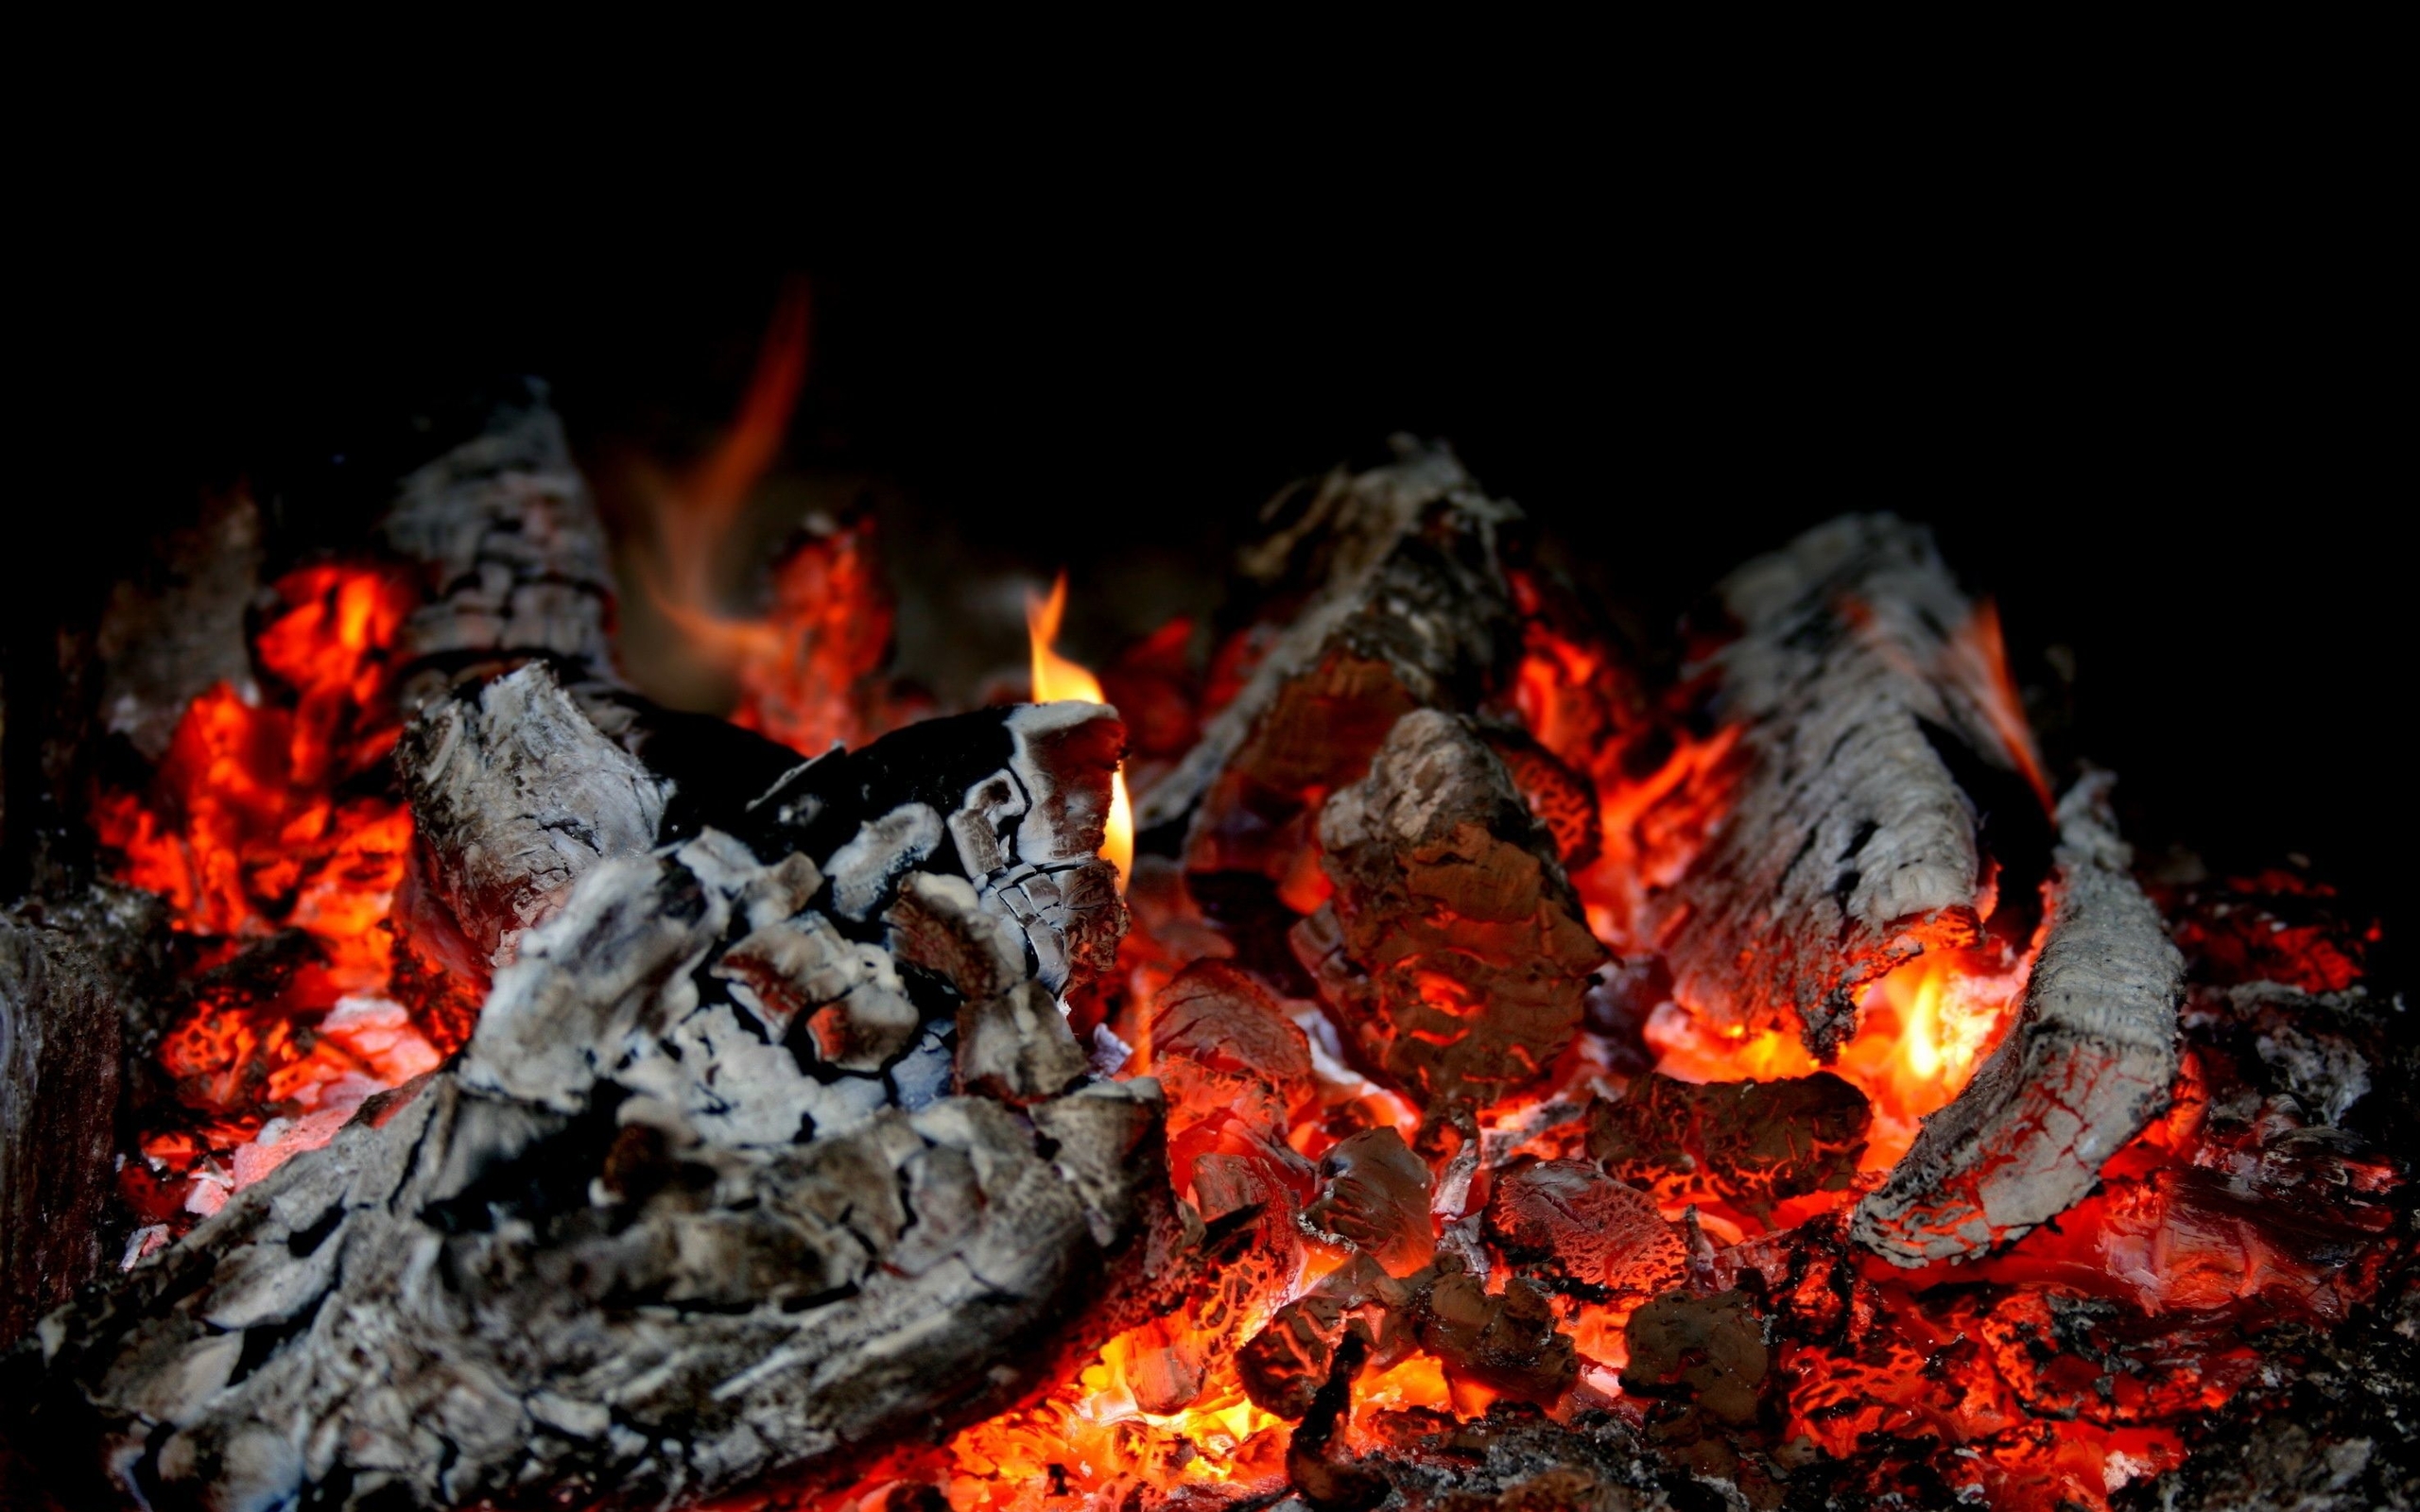 Image: Coal, fire, heat, dark background